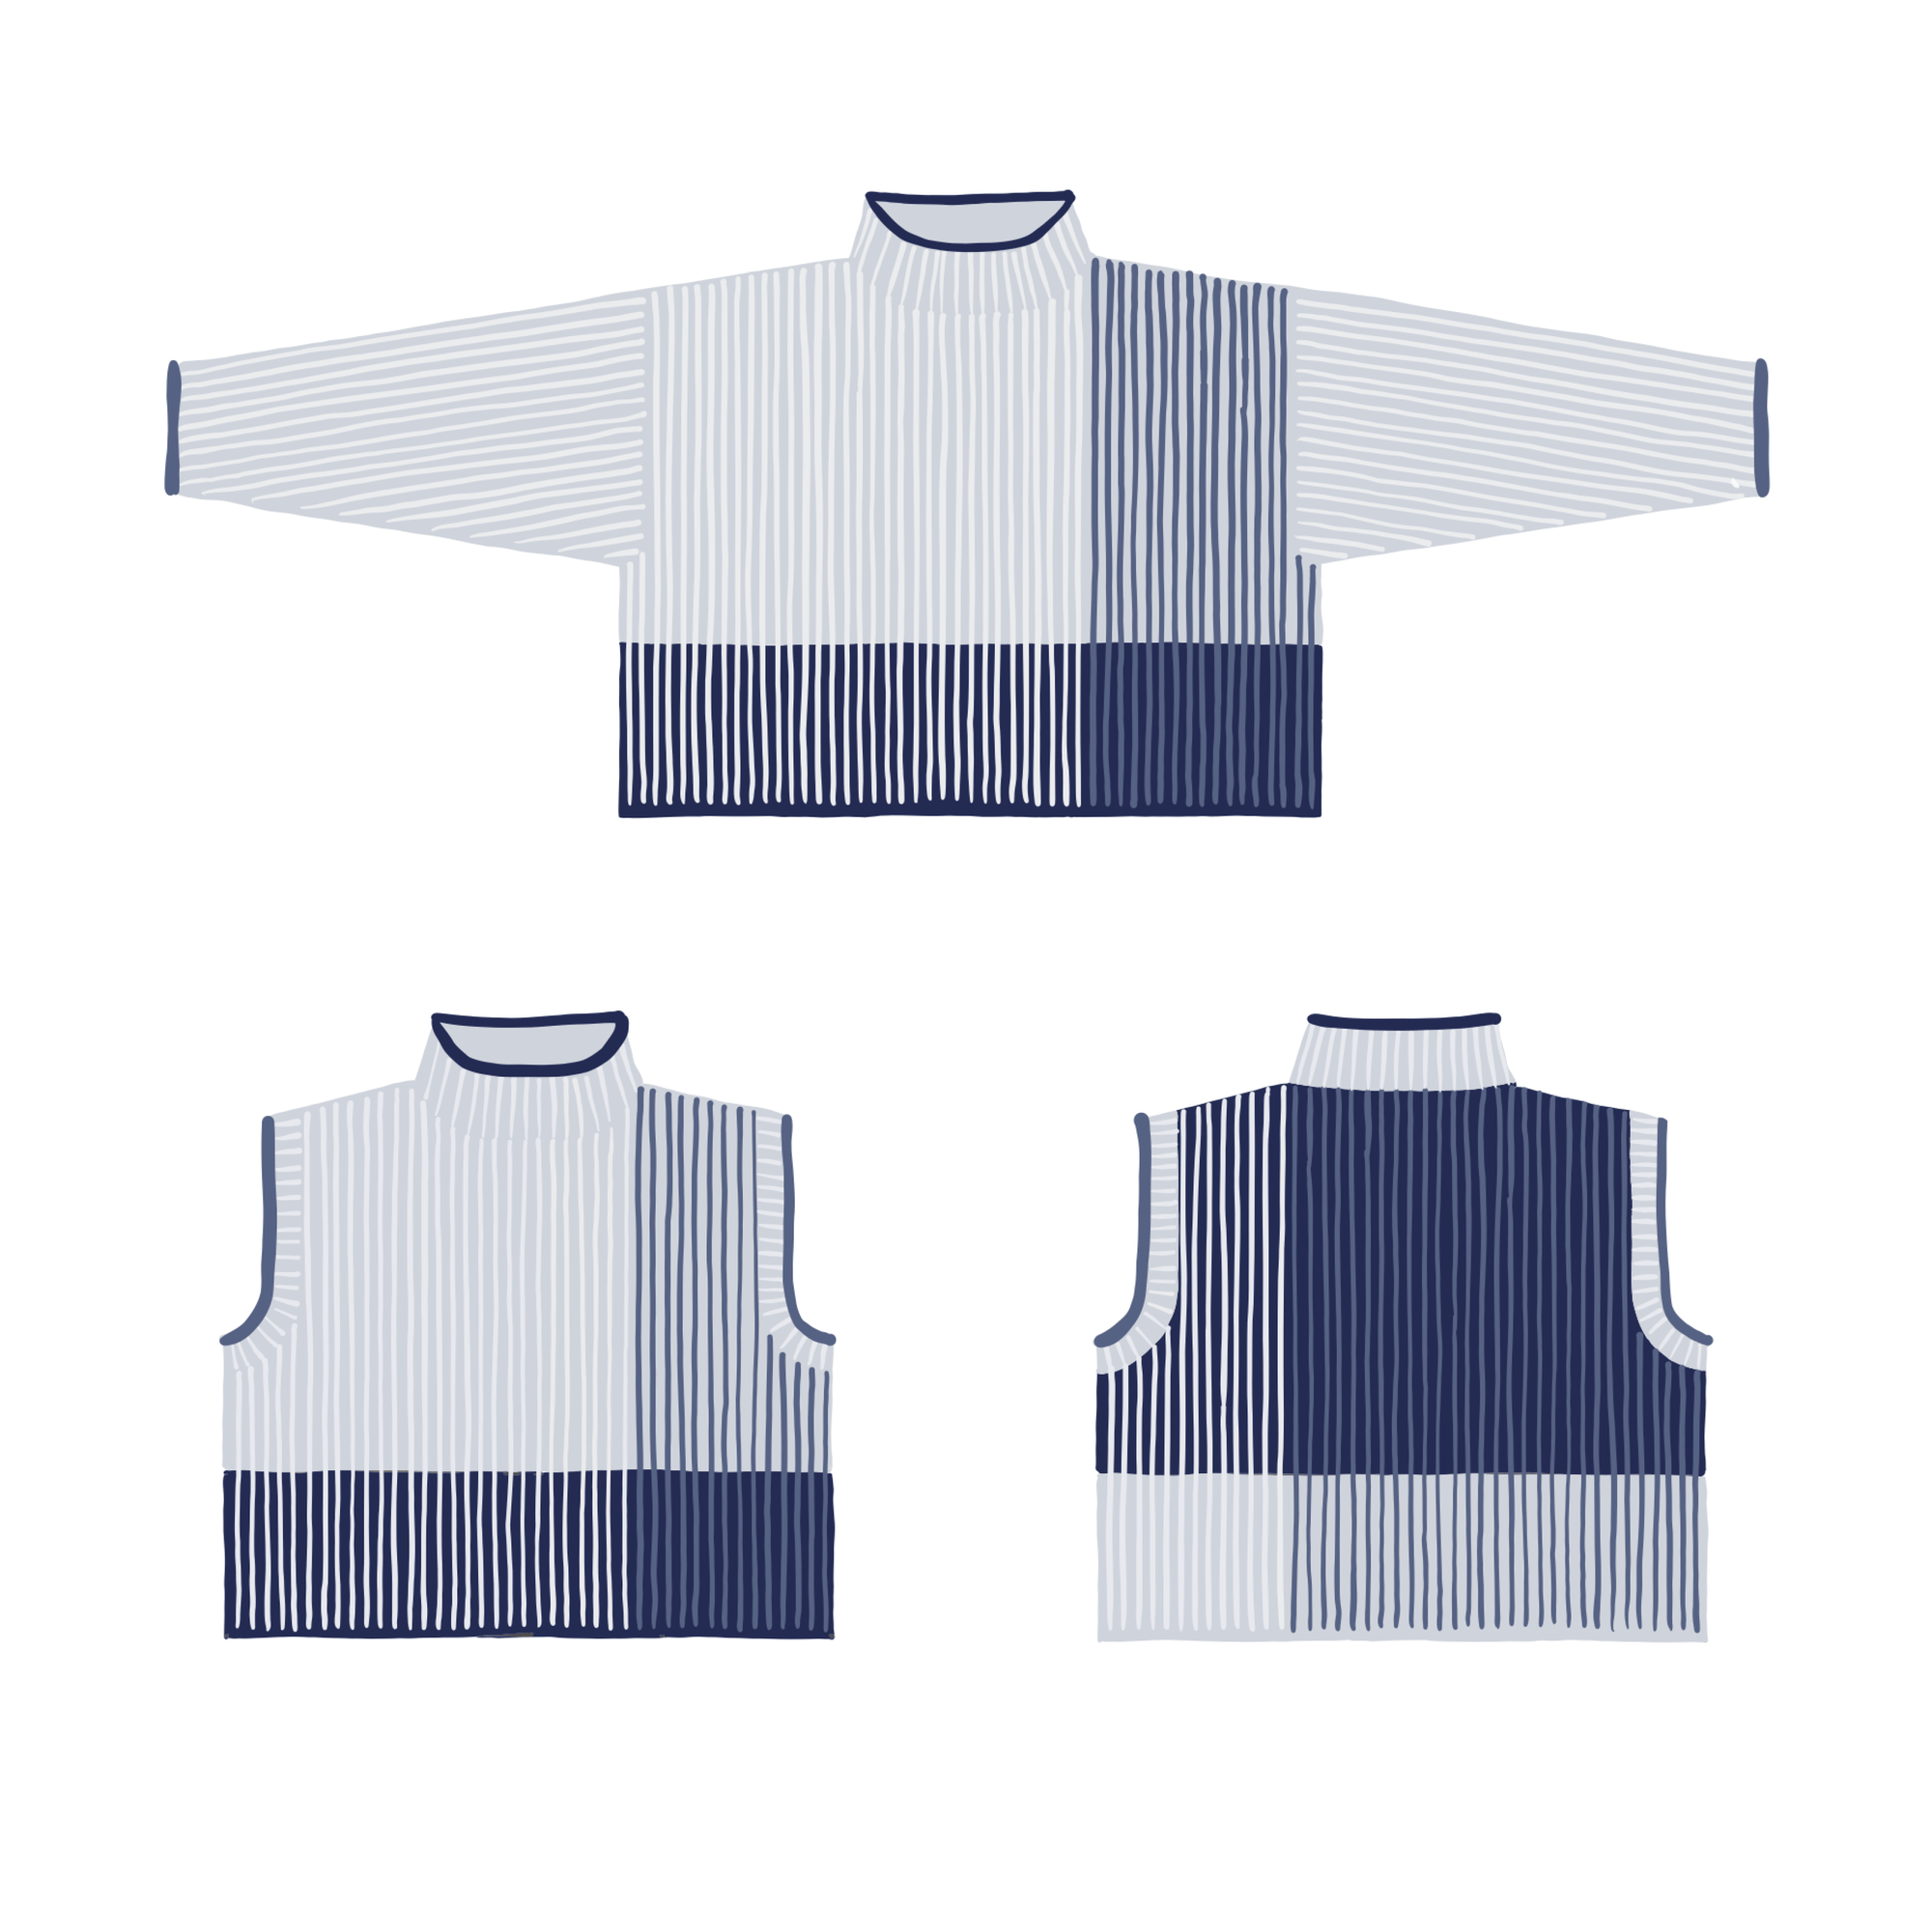 Louie & Lola Yarns Overlay Sweater & Vest Kits - Cormo Fingering & Mohair Silk Lace - Kit 6